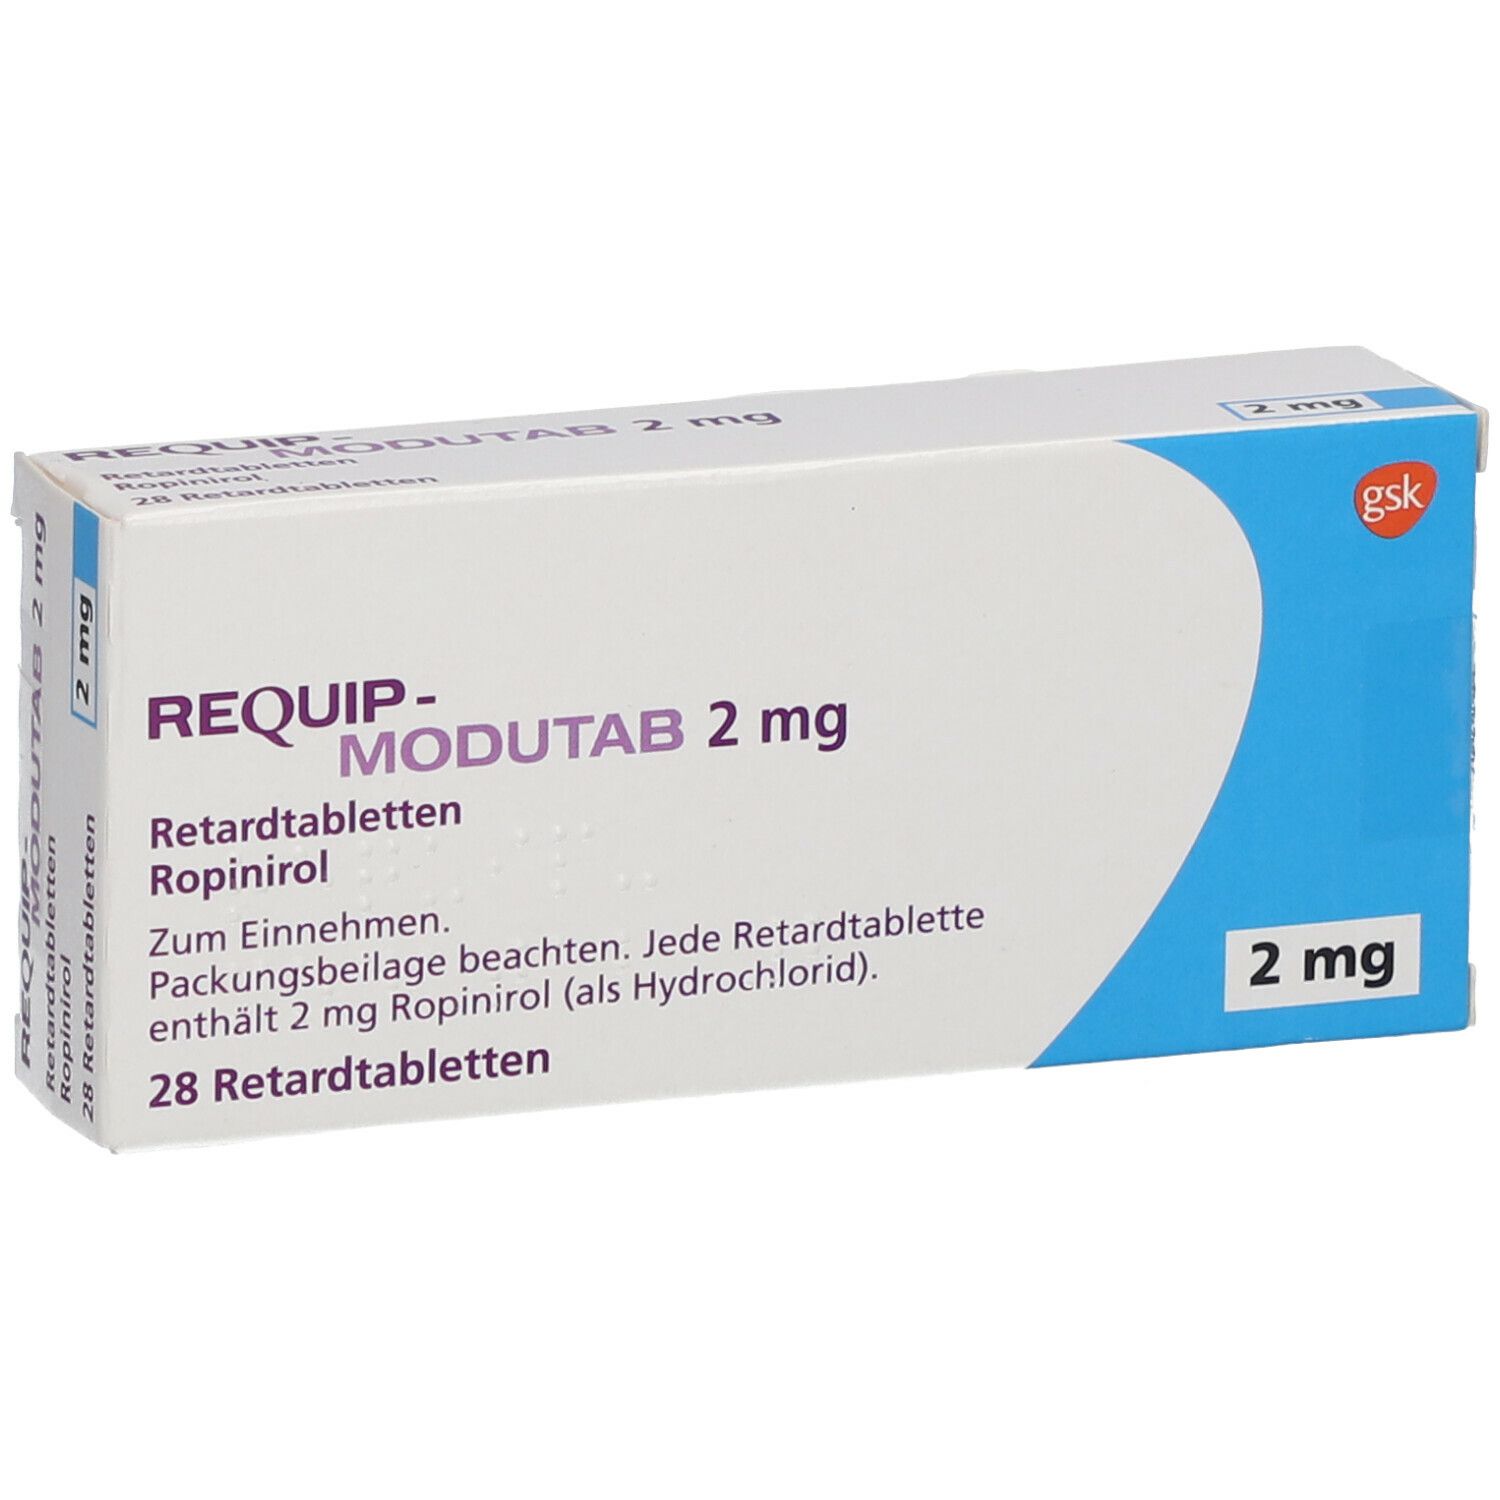 REQUIP® - MODUTAB® 2 mg